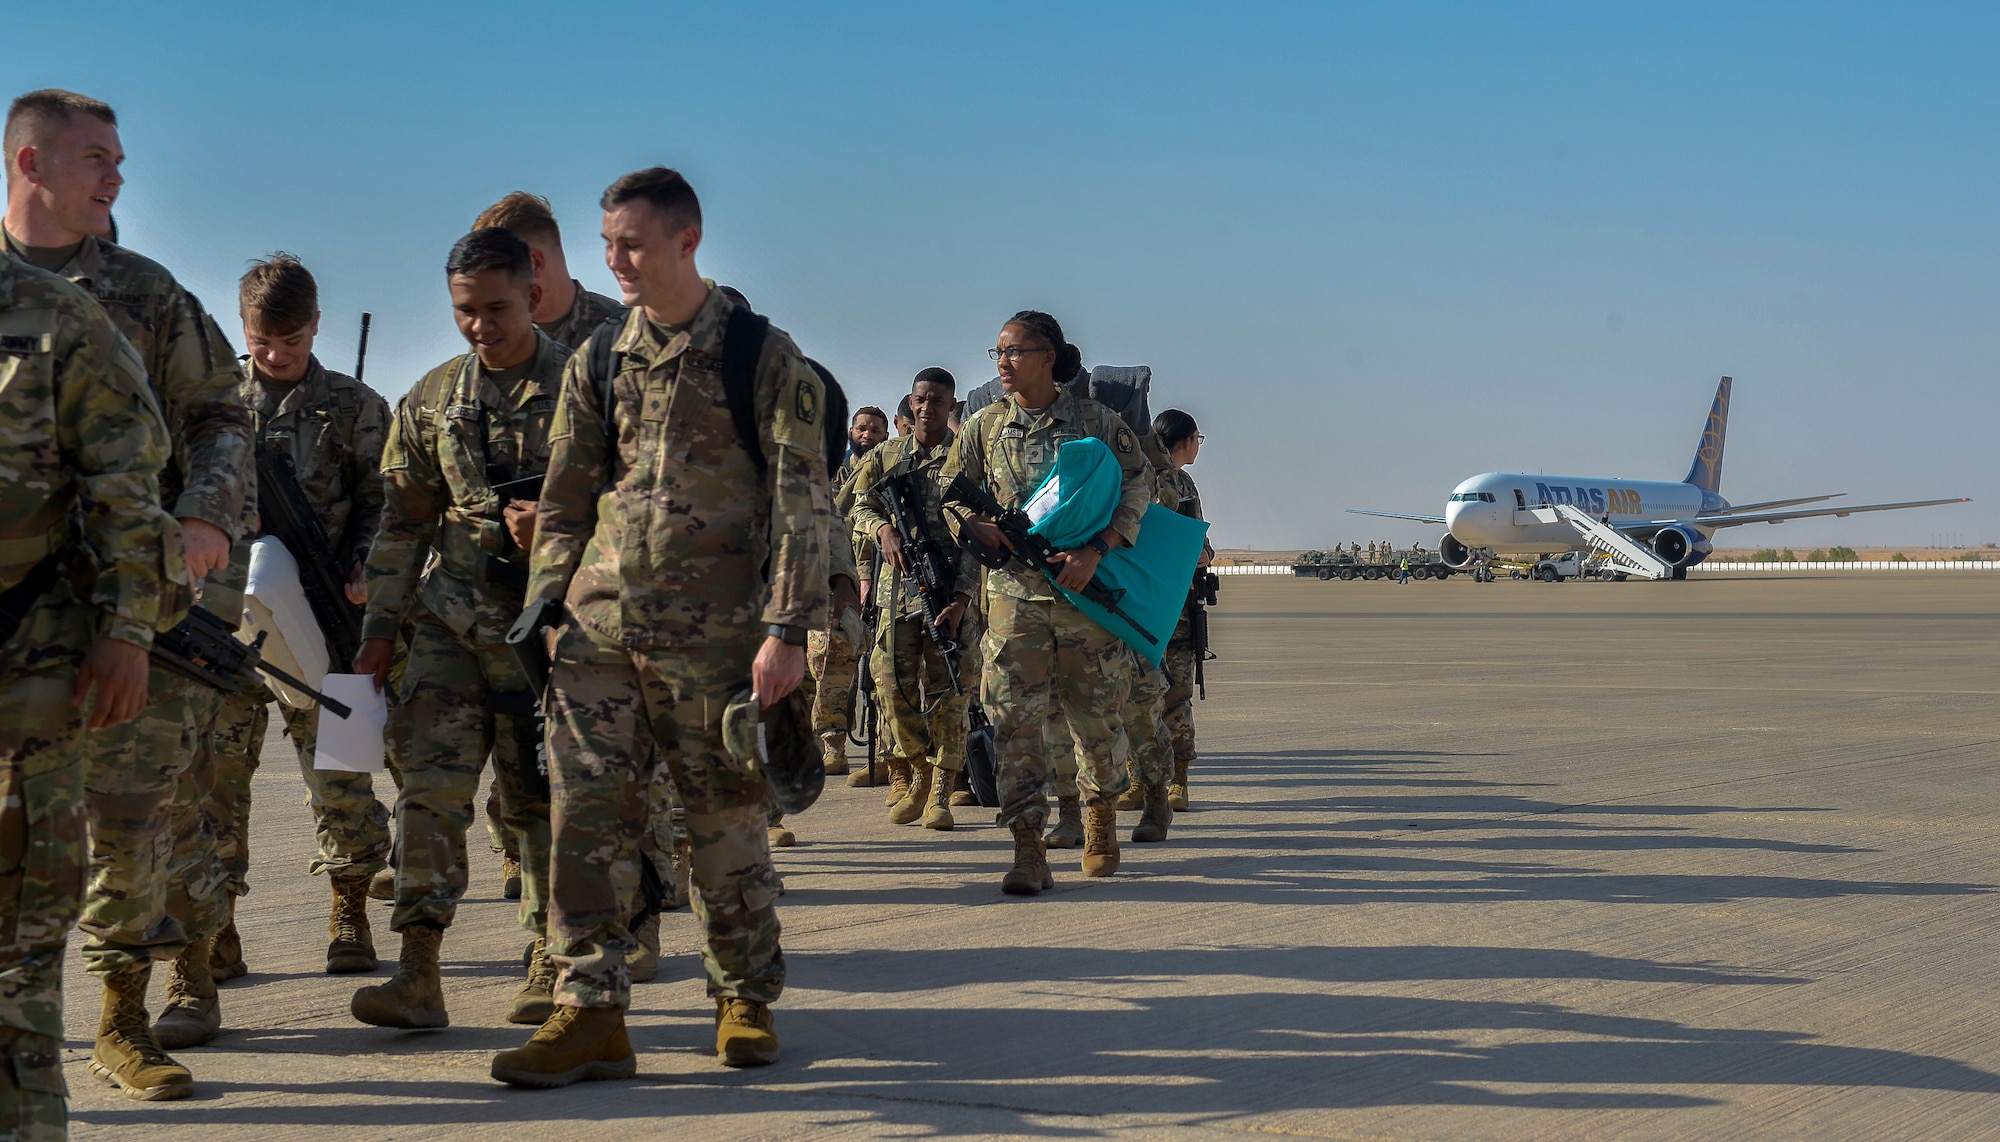 U.S. Army Soldiers with 4-5 Air Defense Artillery Battalion, Ft. Hood, Texas, arrive at Prince Sultan Air Base (PSAB), Kingdom of Saudi Arabia (KSA), October 21, 2019.